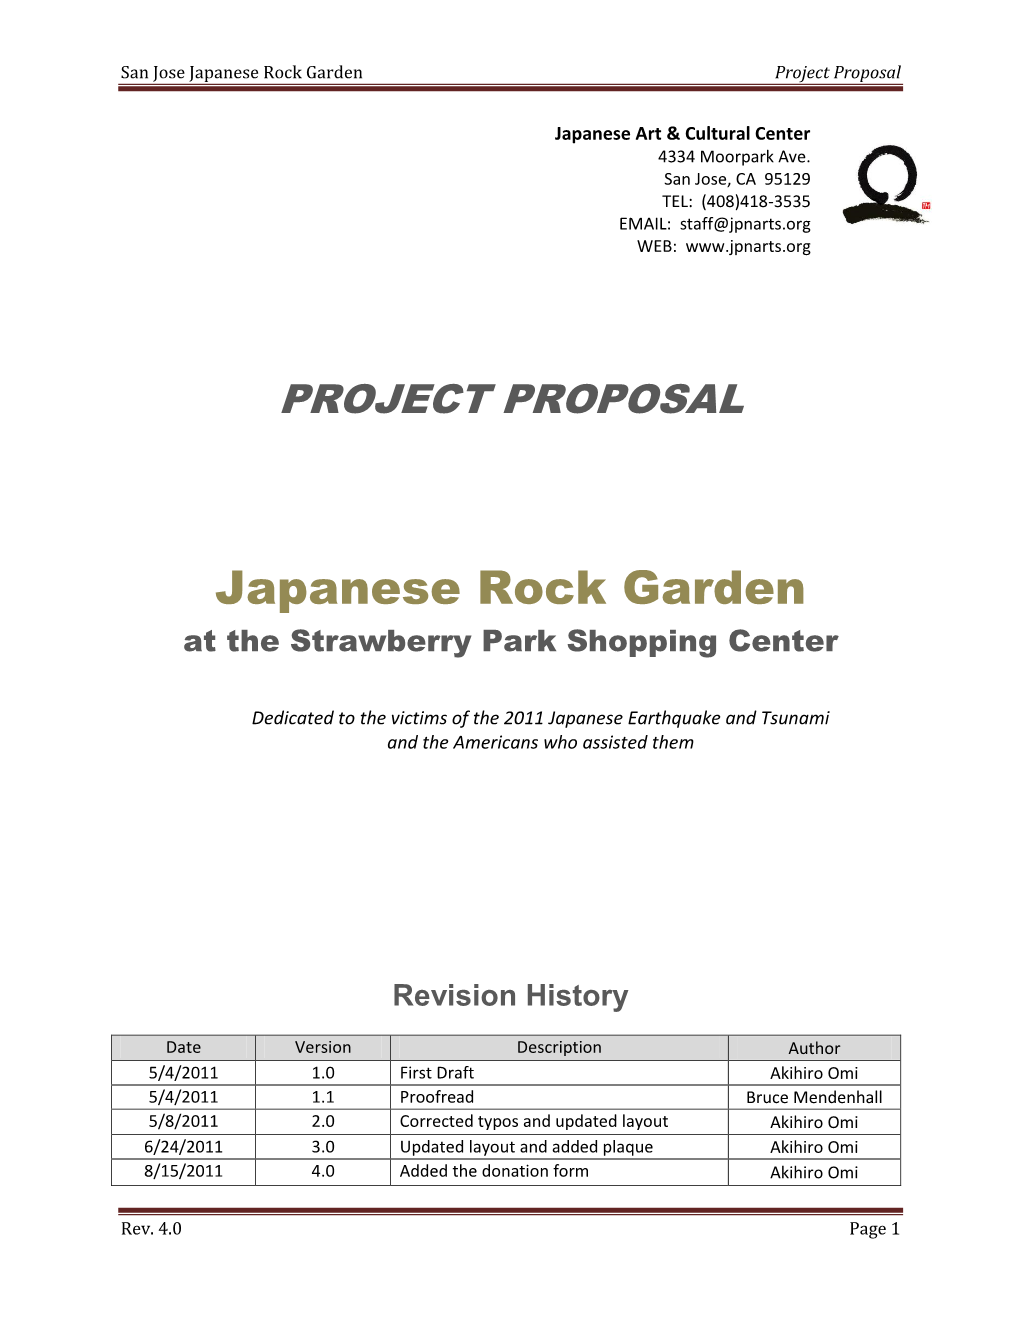 Japanese Rock Garden Project Proposal